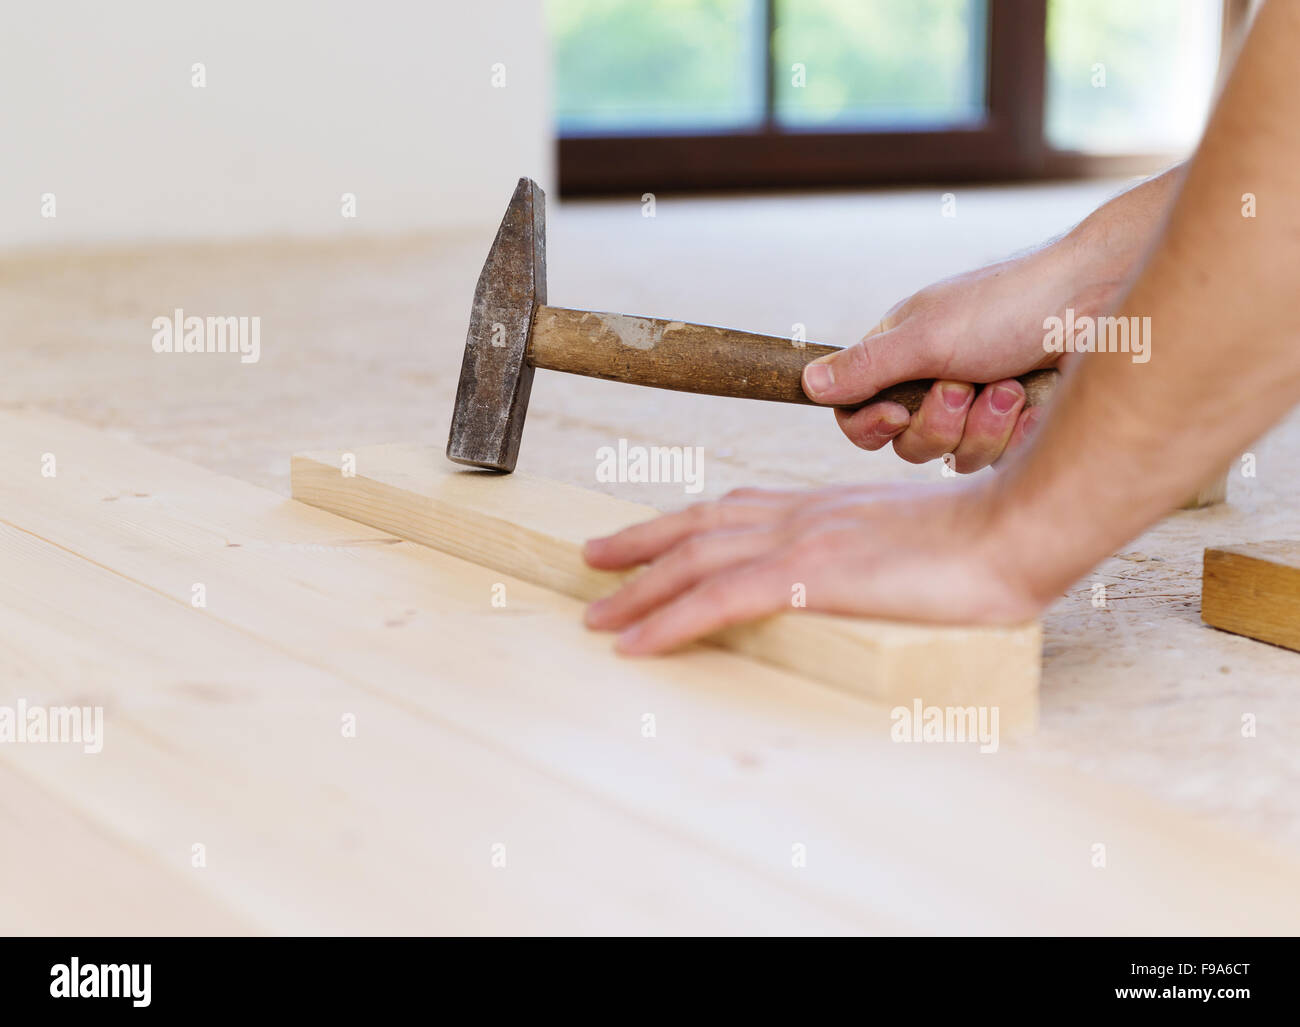 Handyman Installation Holzfußboden im neuen Haus Stockfoto